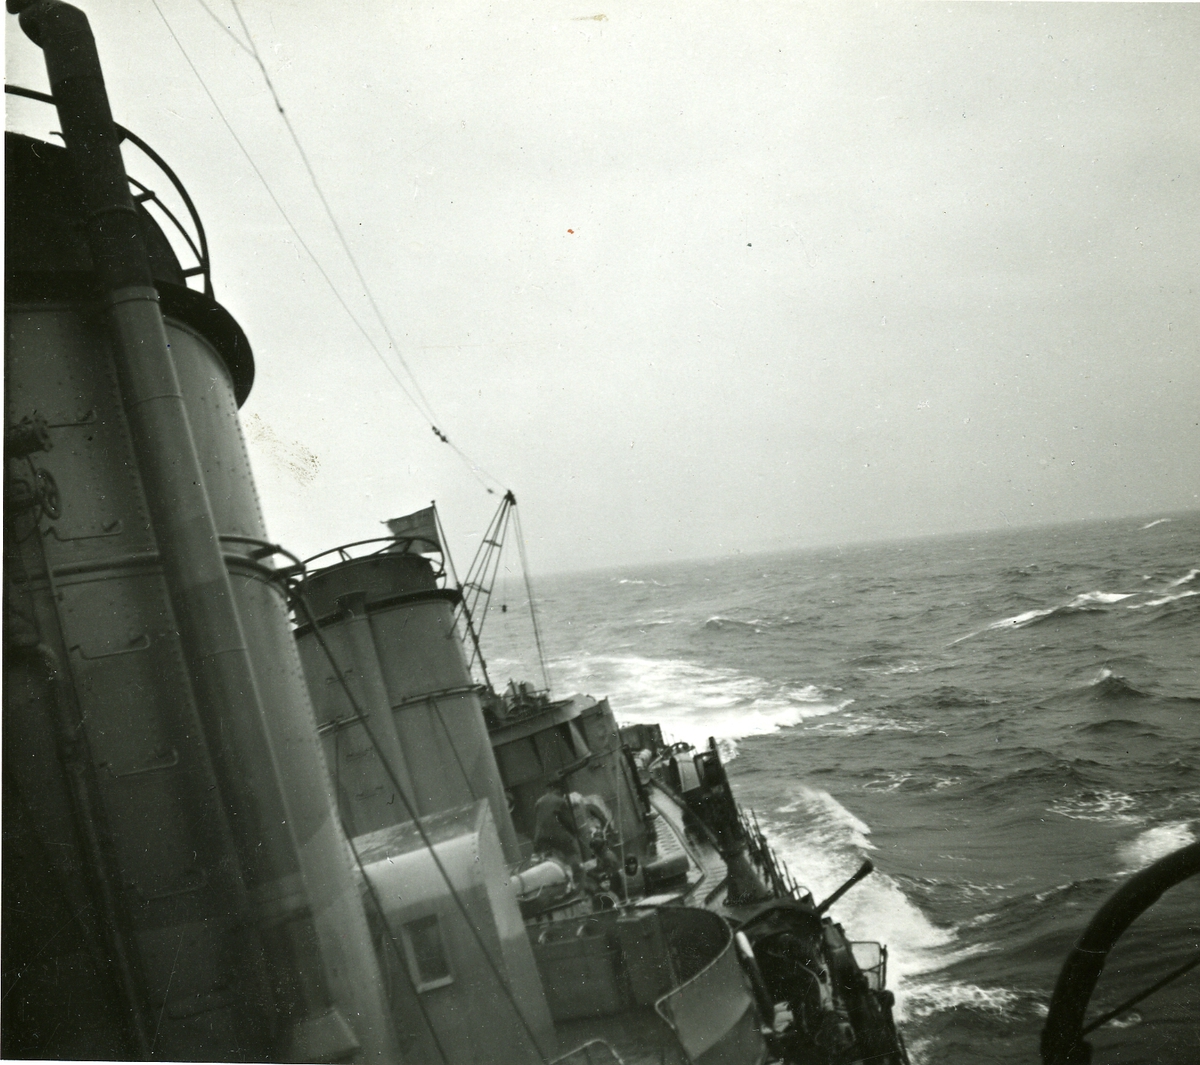 Under gång i dåligt väder.
Kustflottan mars 1945.